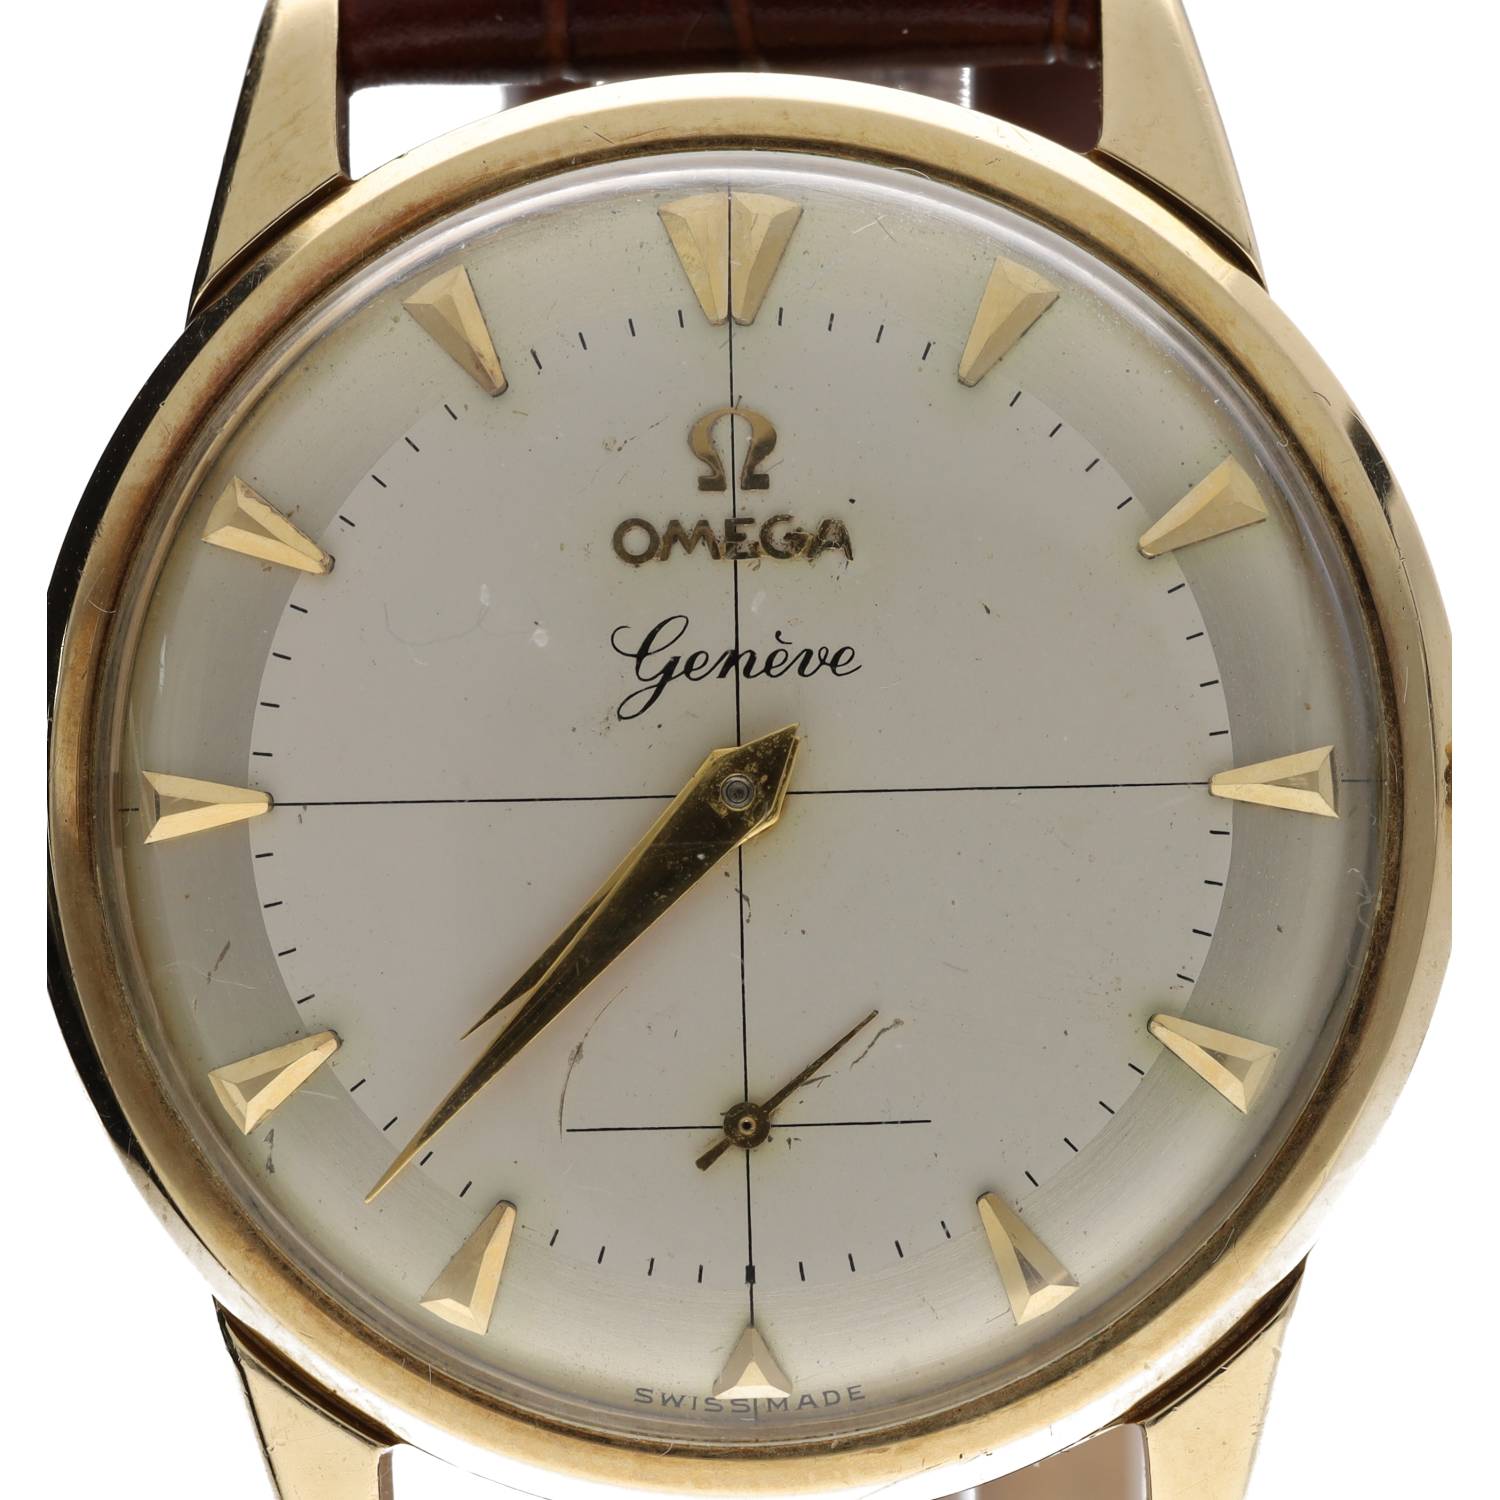 Omega Genéve 9ct gentleman's wristwatch, case no. 969 34926, serial no. 17772xxx, circa 1960, - Image 3 of 7